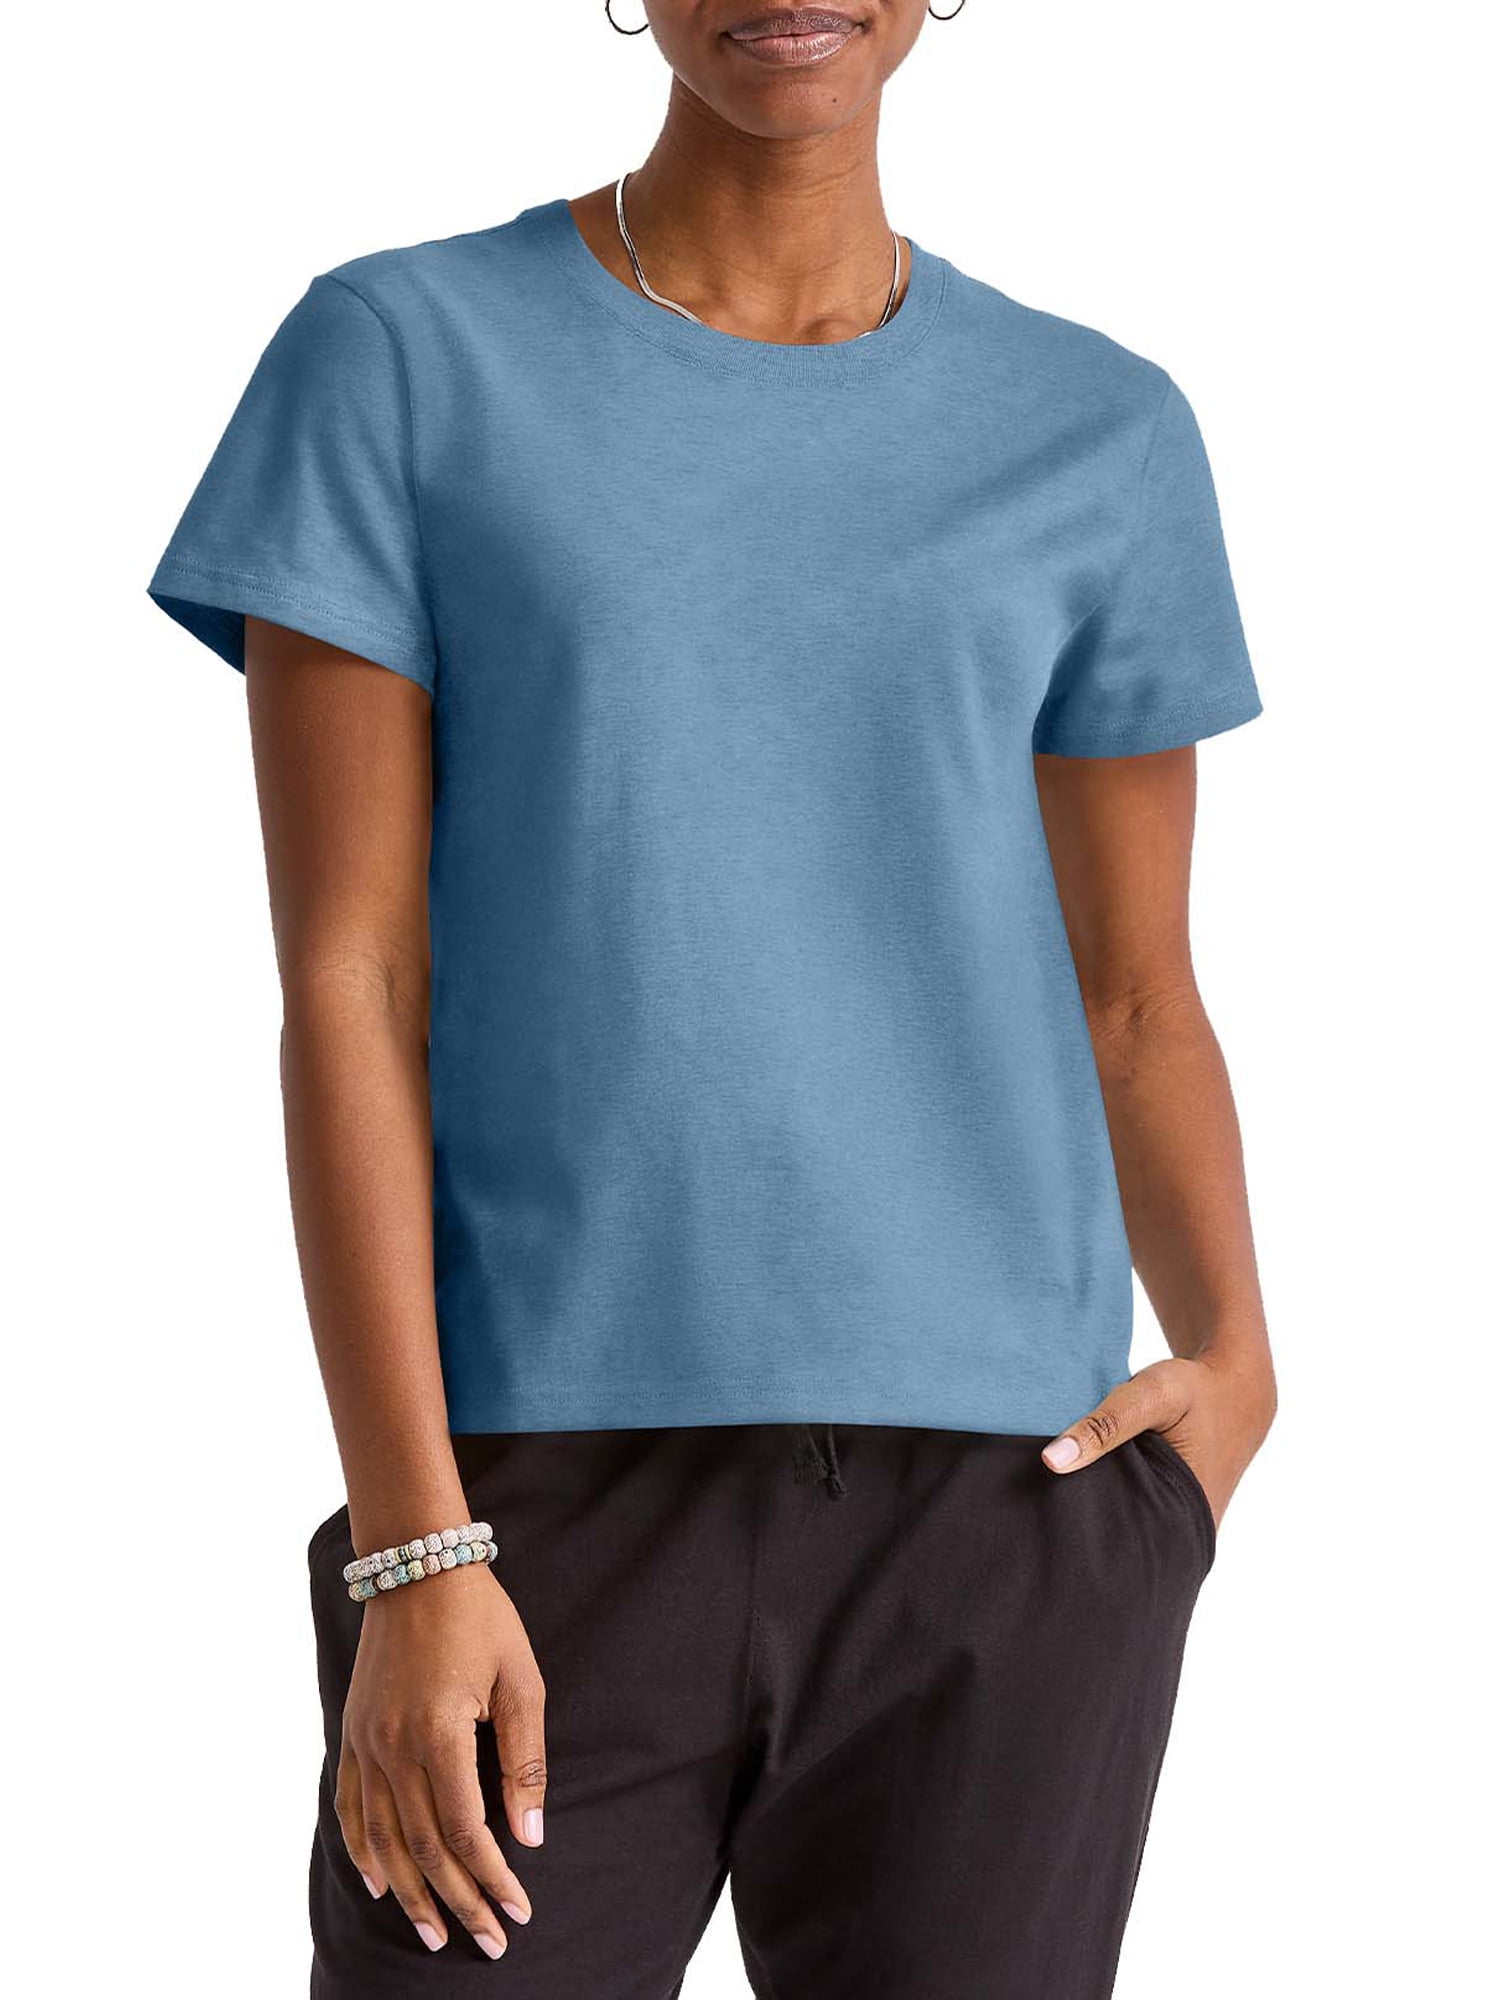 Hanes Originals Women’s T-Shirt with Curved Hem, 100% Cotton Classic ...